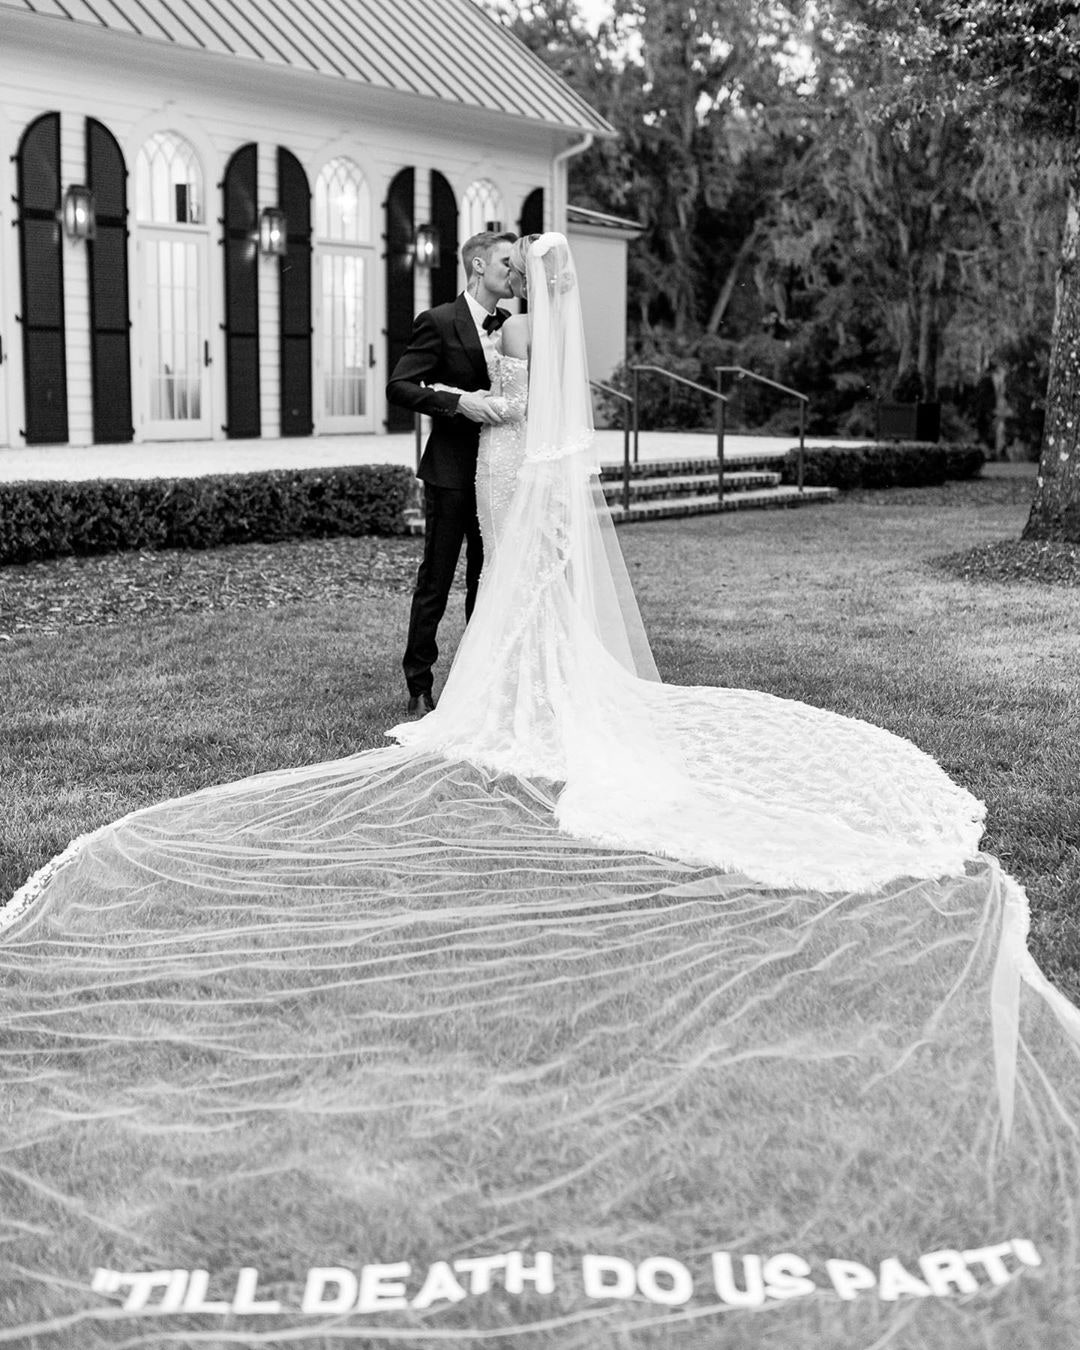 hailey-bieber-wedding-veil.jpg